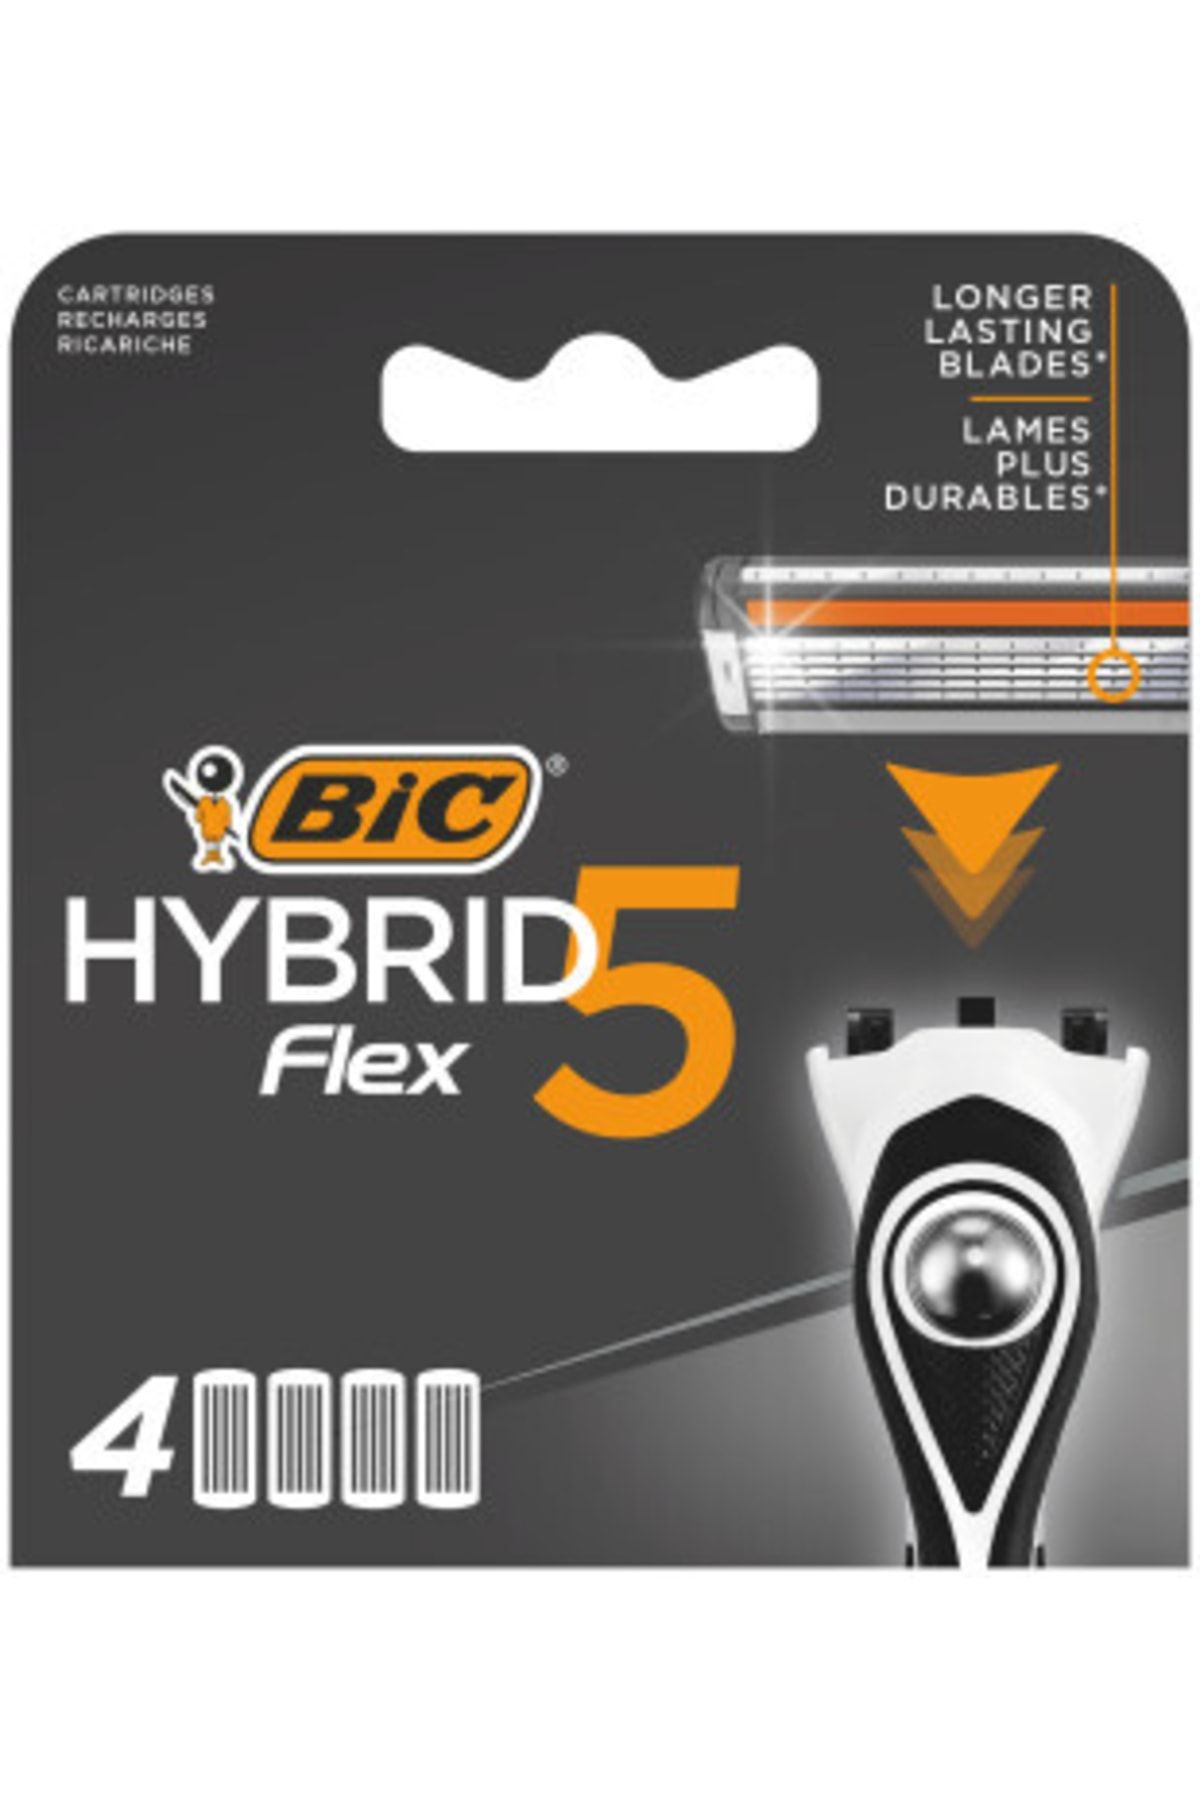 Bic flex hybrid купить. BIC Flex Hybrid 3 4 кассеты. Кассеты BIC 4 Flex. Станок BIC Flex 5 Hybrid. BIC Flex 5 Hybrid кассеты.